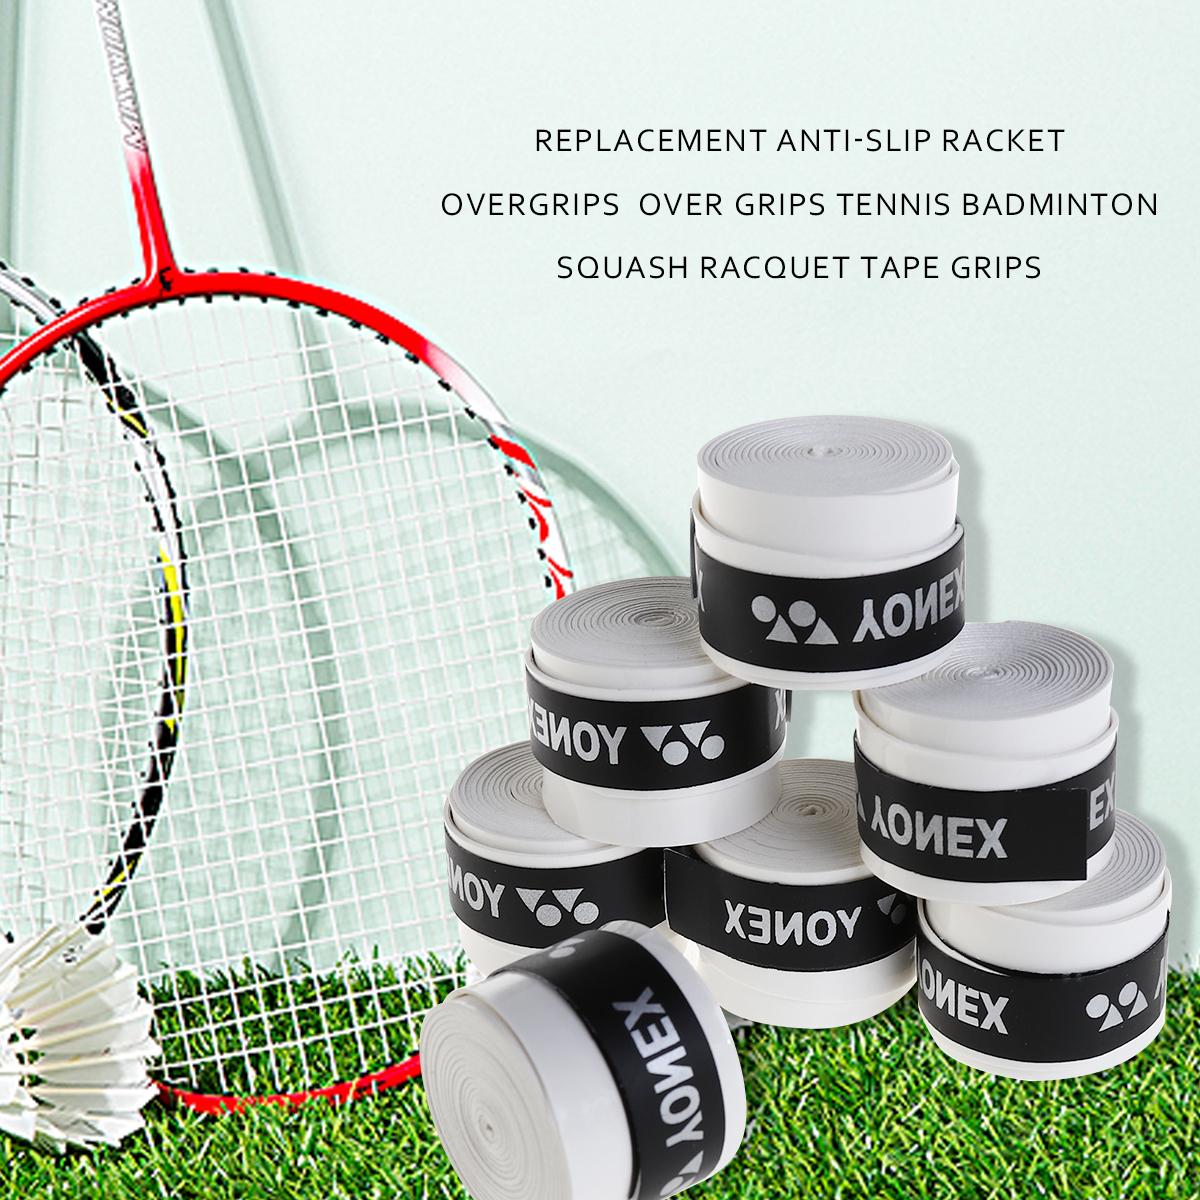 60pcs Replacement Anti-slip Racket Overgrips Over Grips Tennis Badminton Squash 